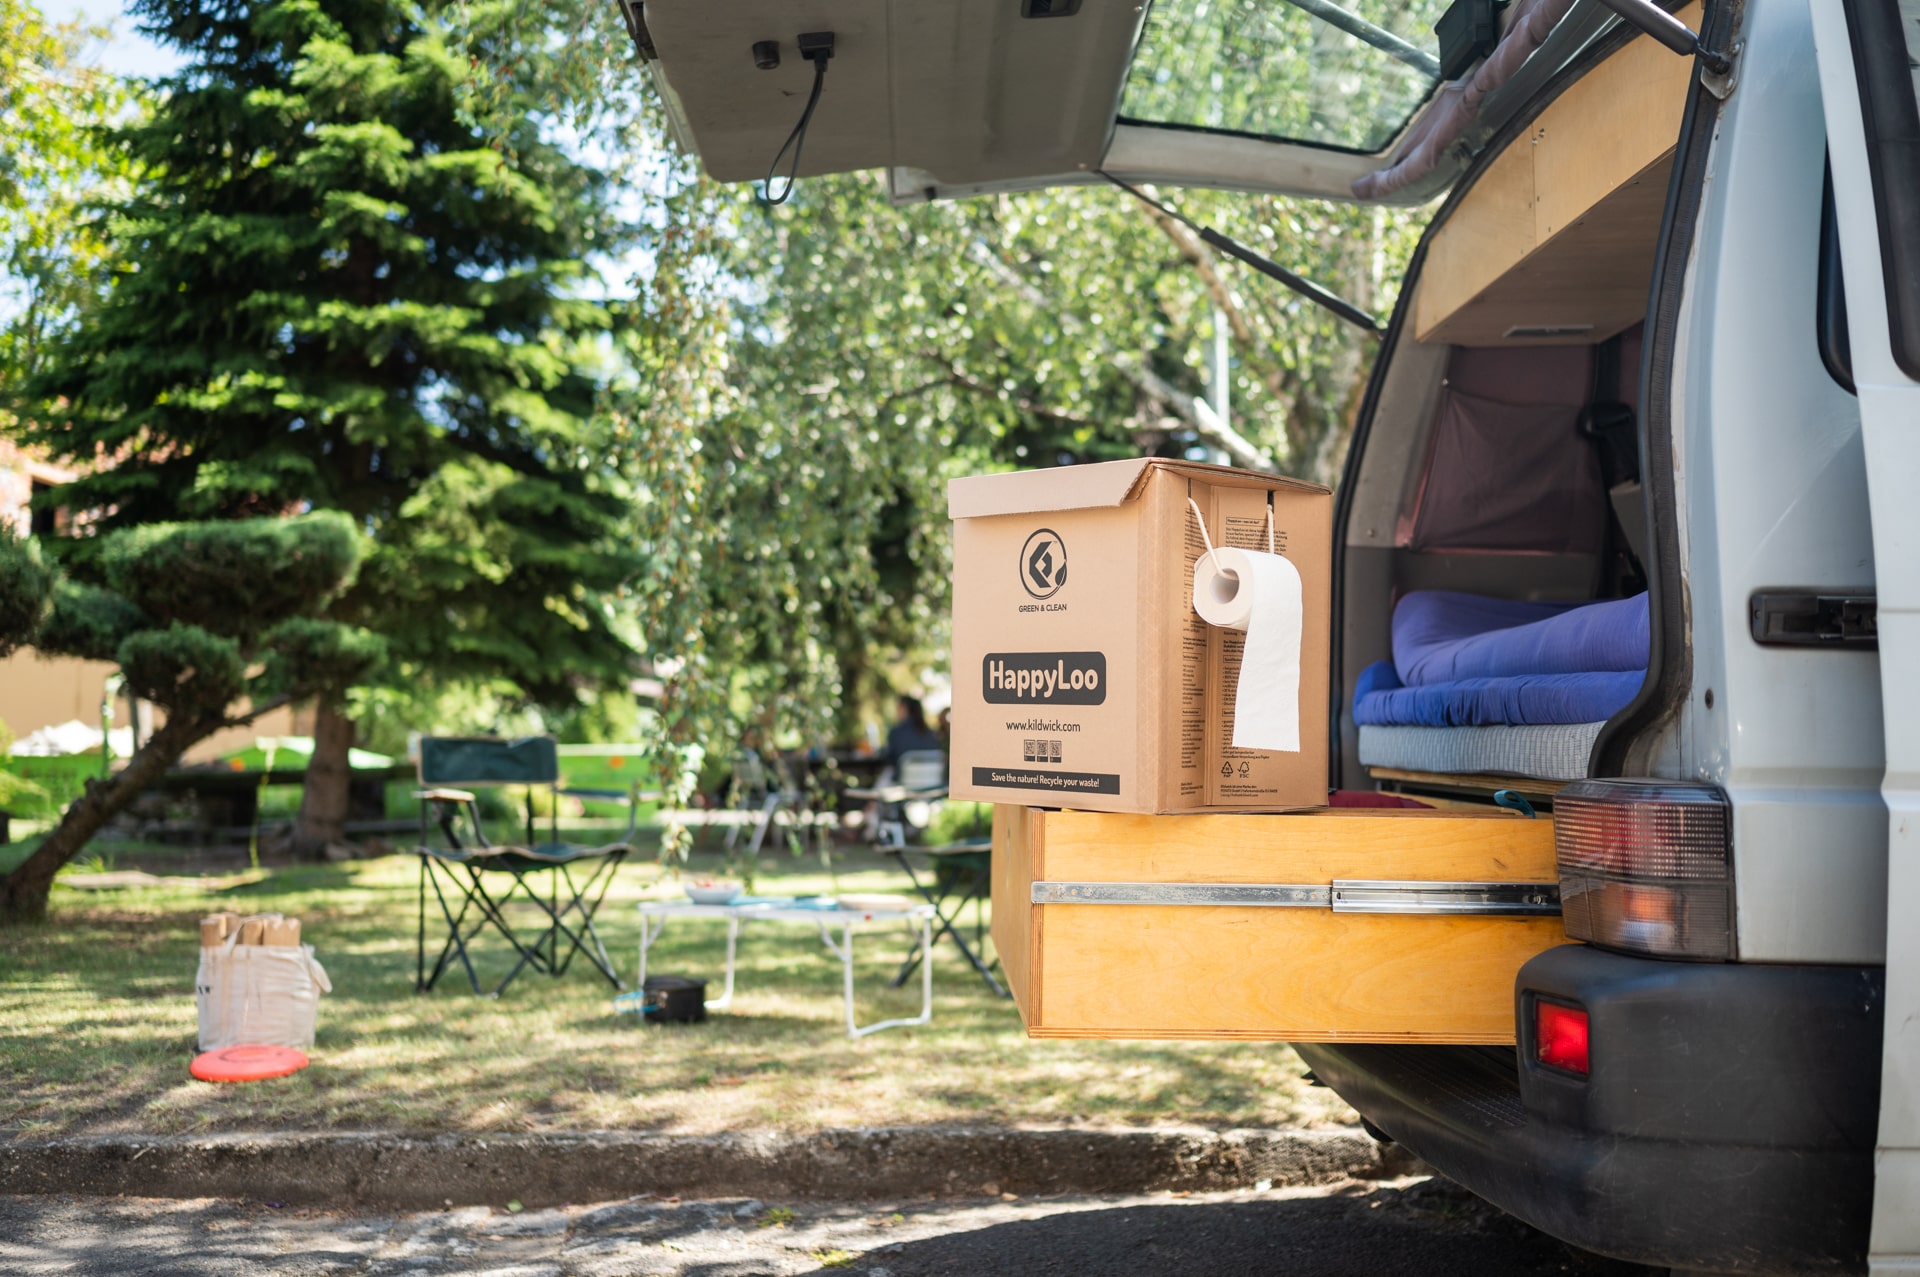 The Kildwick HappyLoo portable drytoilet on a shelf of a camping van